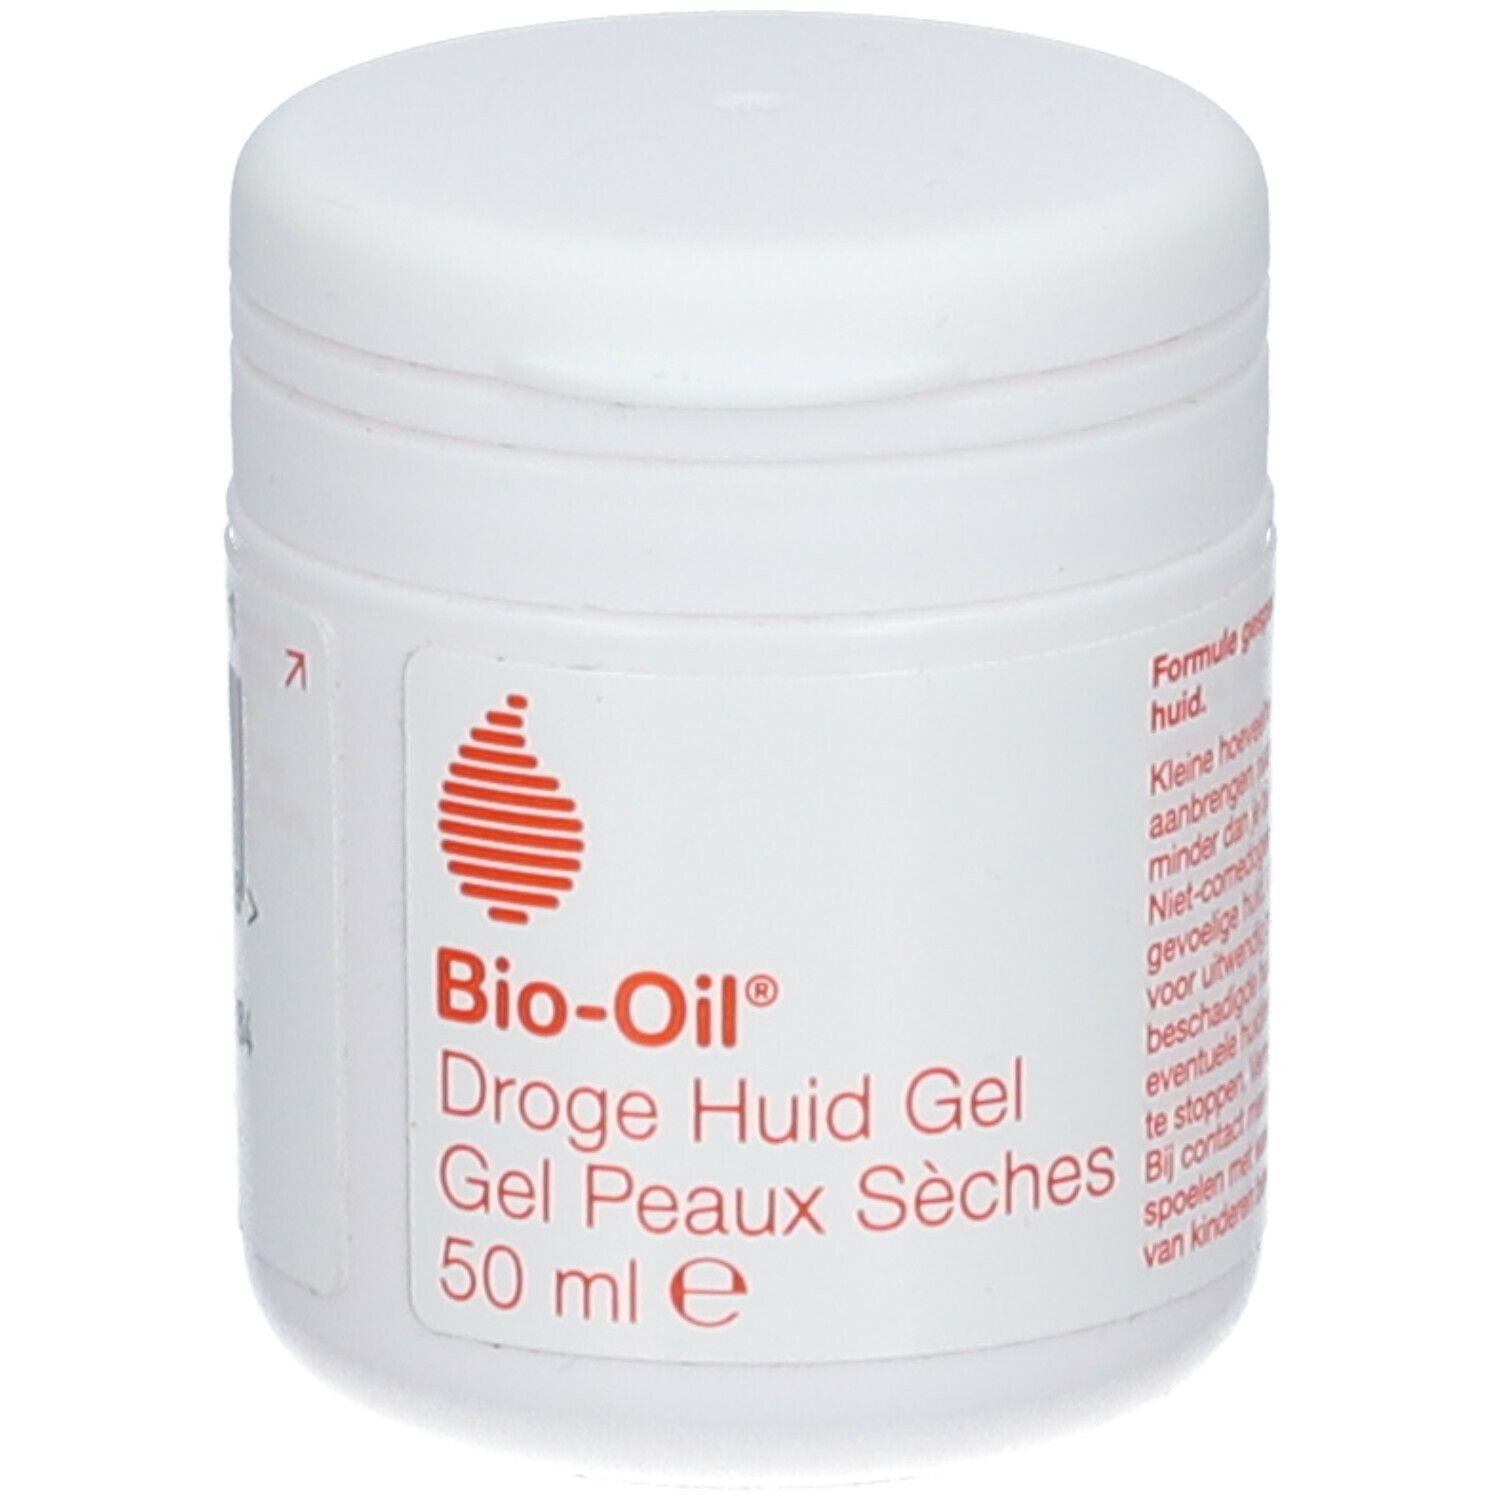 Image of Bi-Oil® Gel für trockene Haut